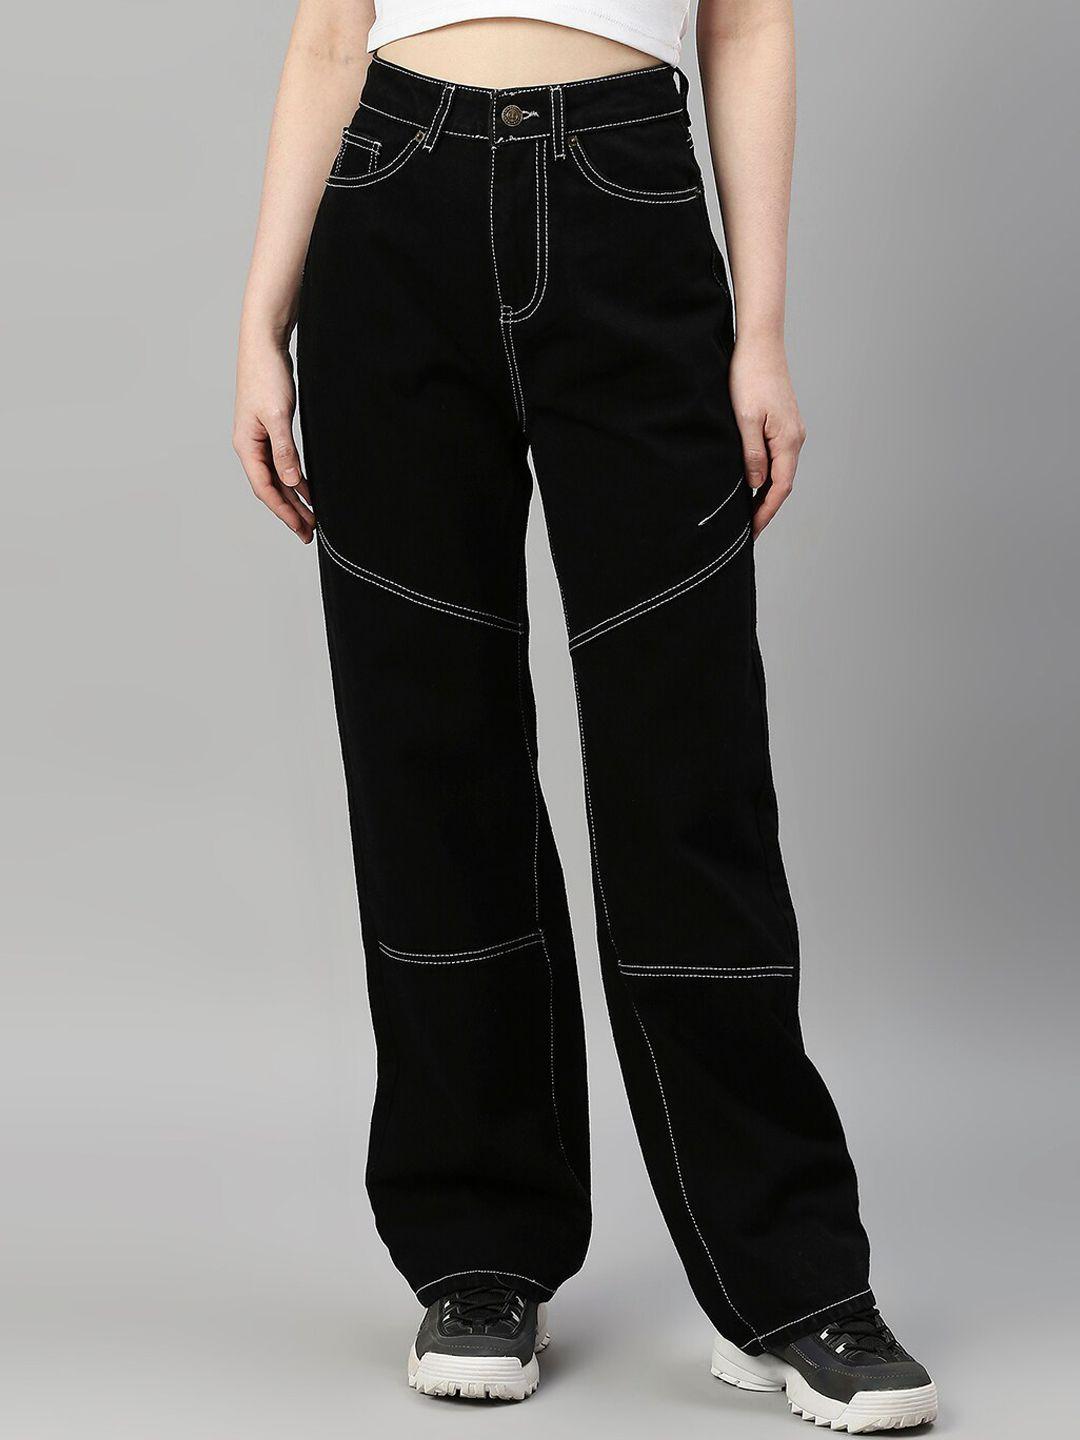 tarama-women-black-straight-fit-high-rise-cotton-jeans